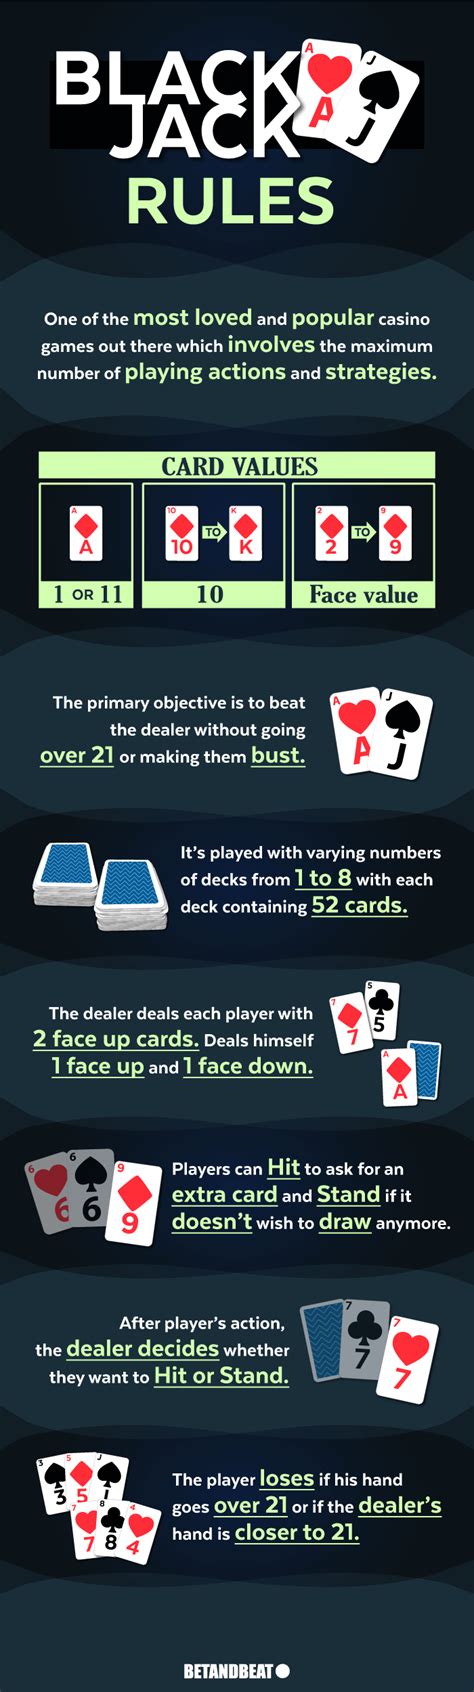 blackjack deck rules huws canada